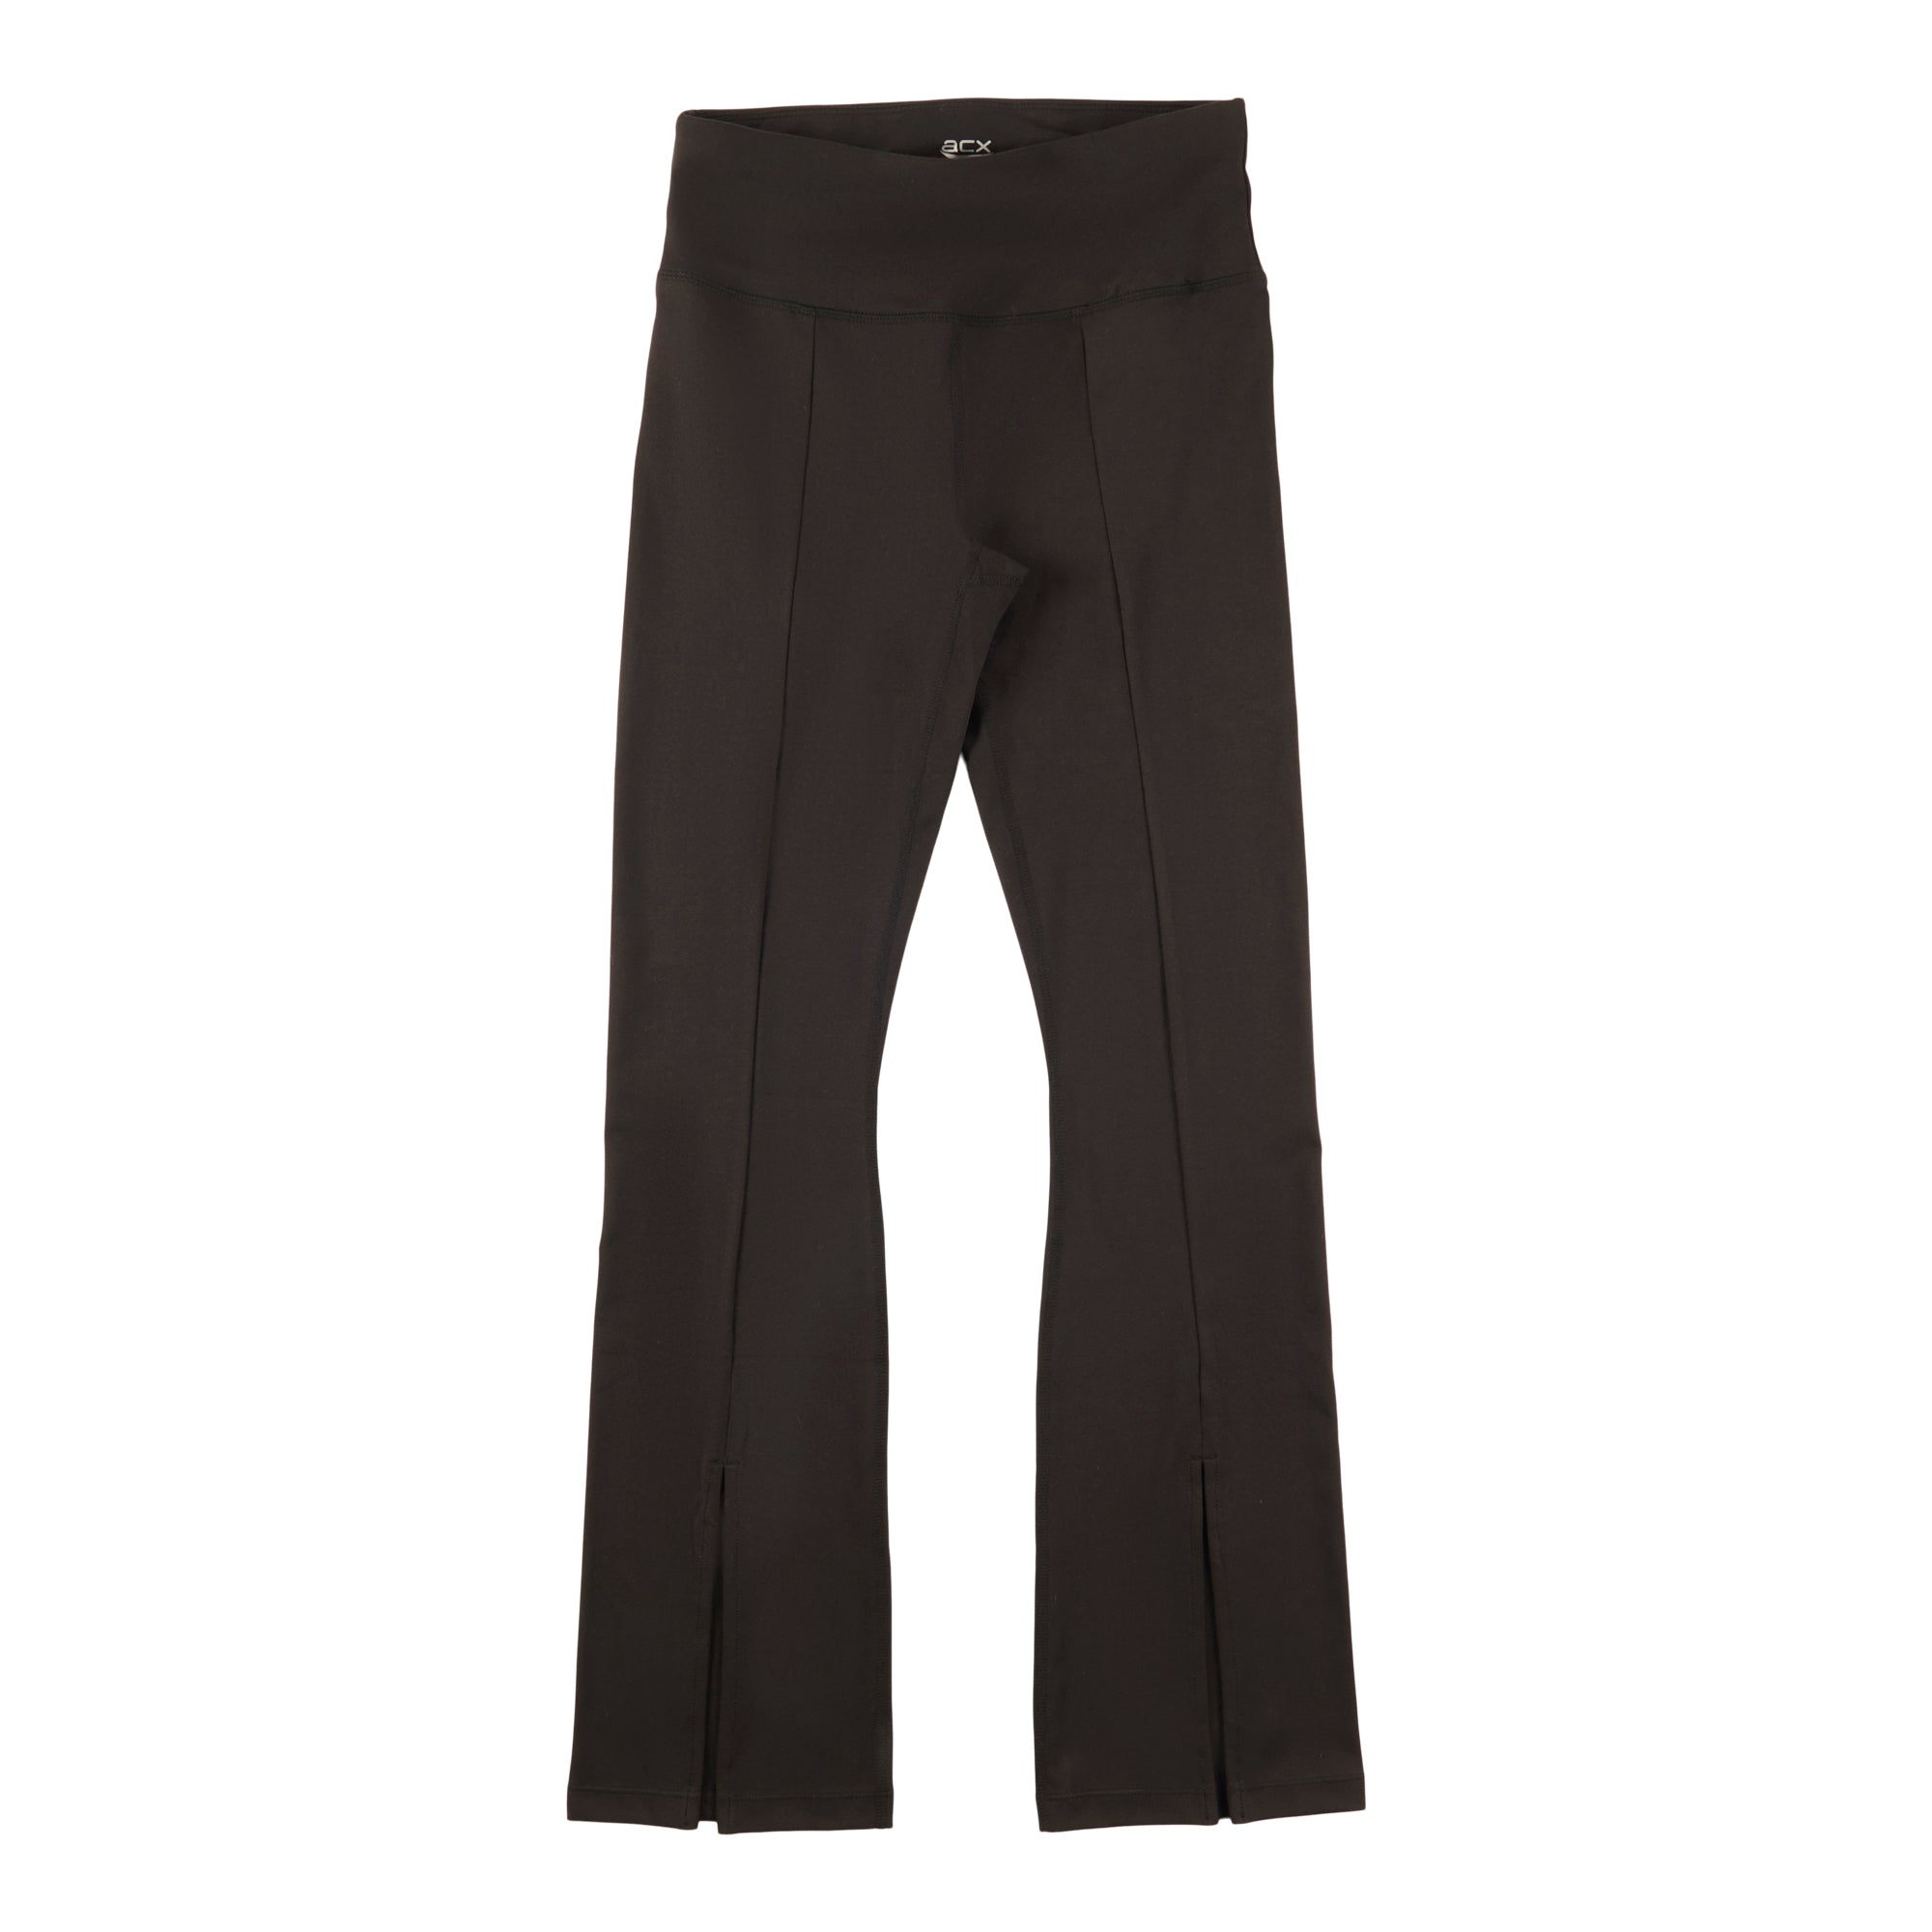 pxiakgy yoga pants women's fashion short pants casual chino pants solid  trouser black + l 